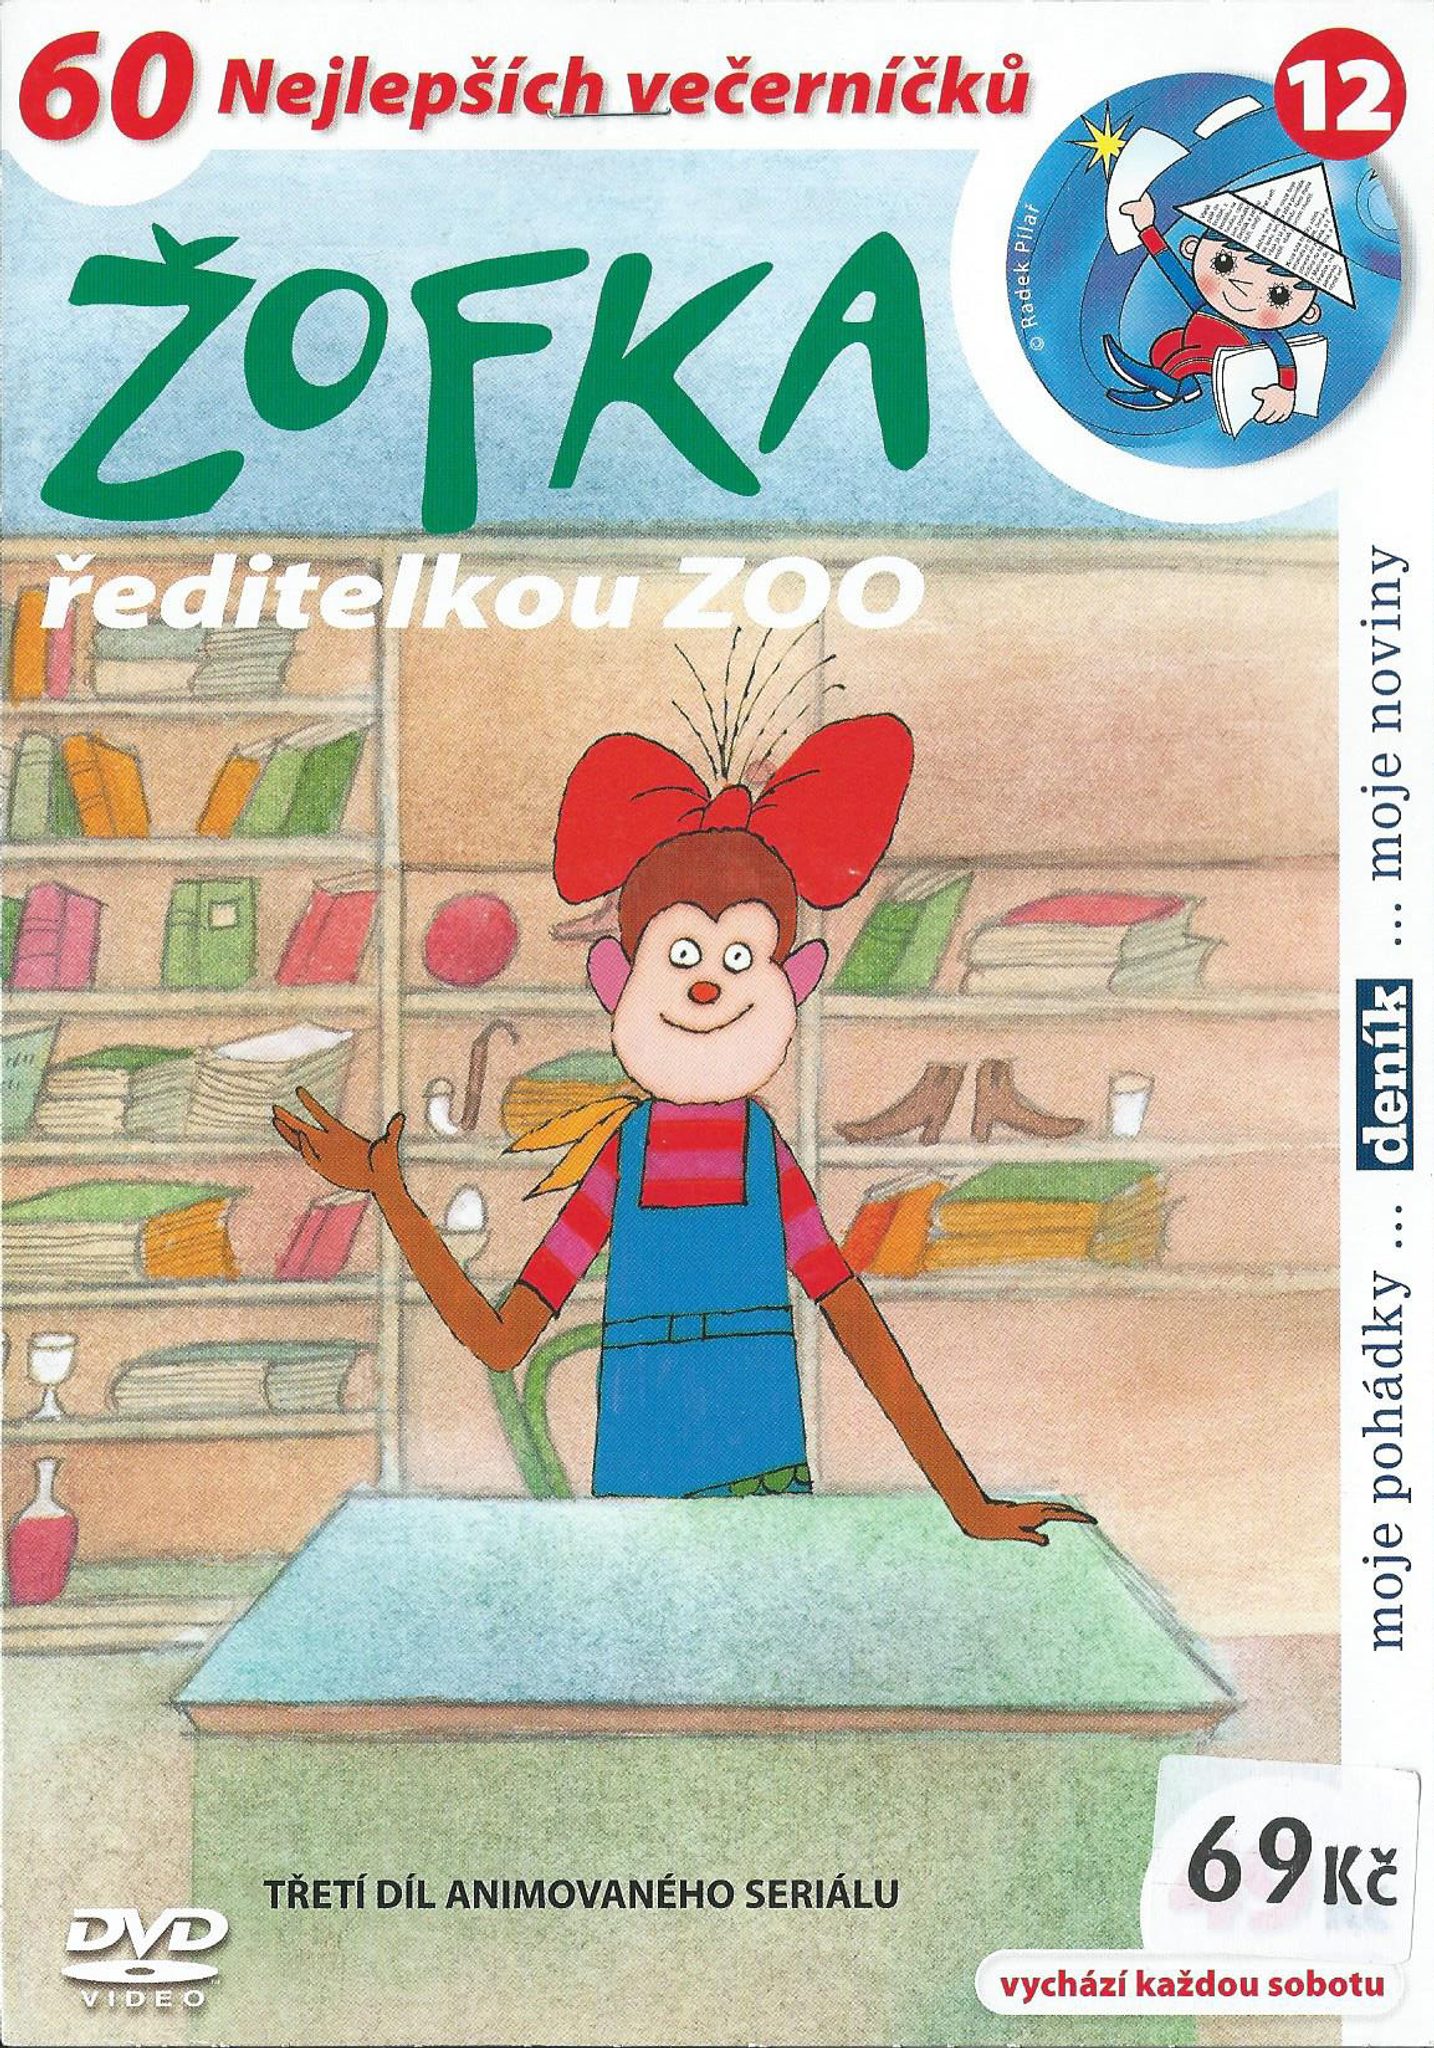 DVD ofka editelkou ZOO